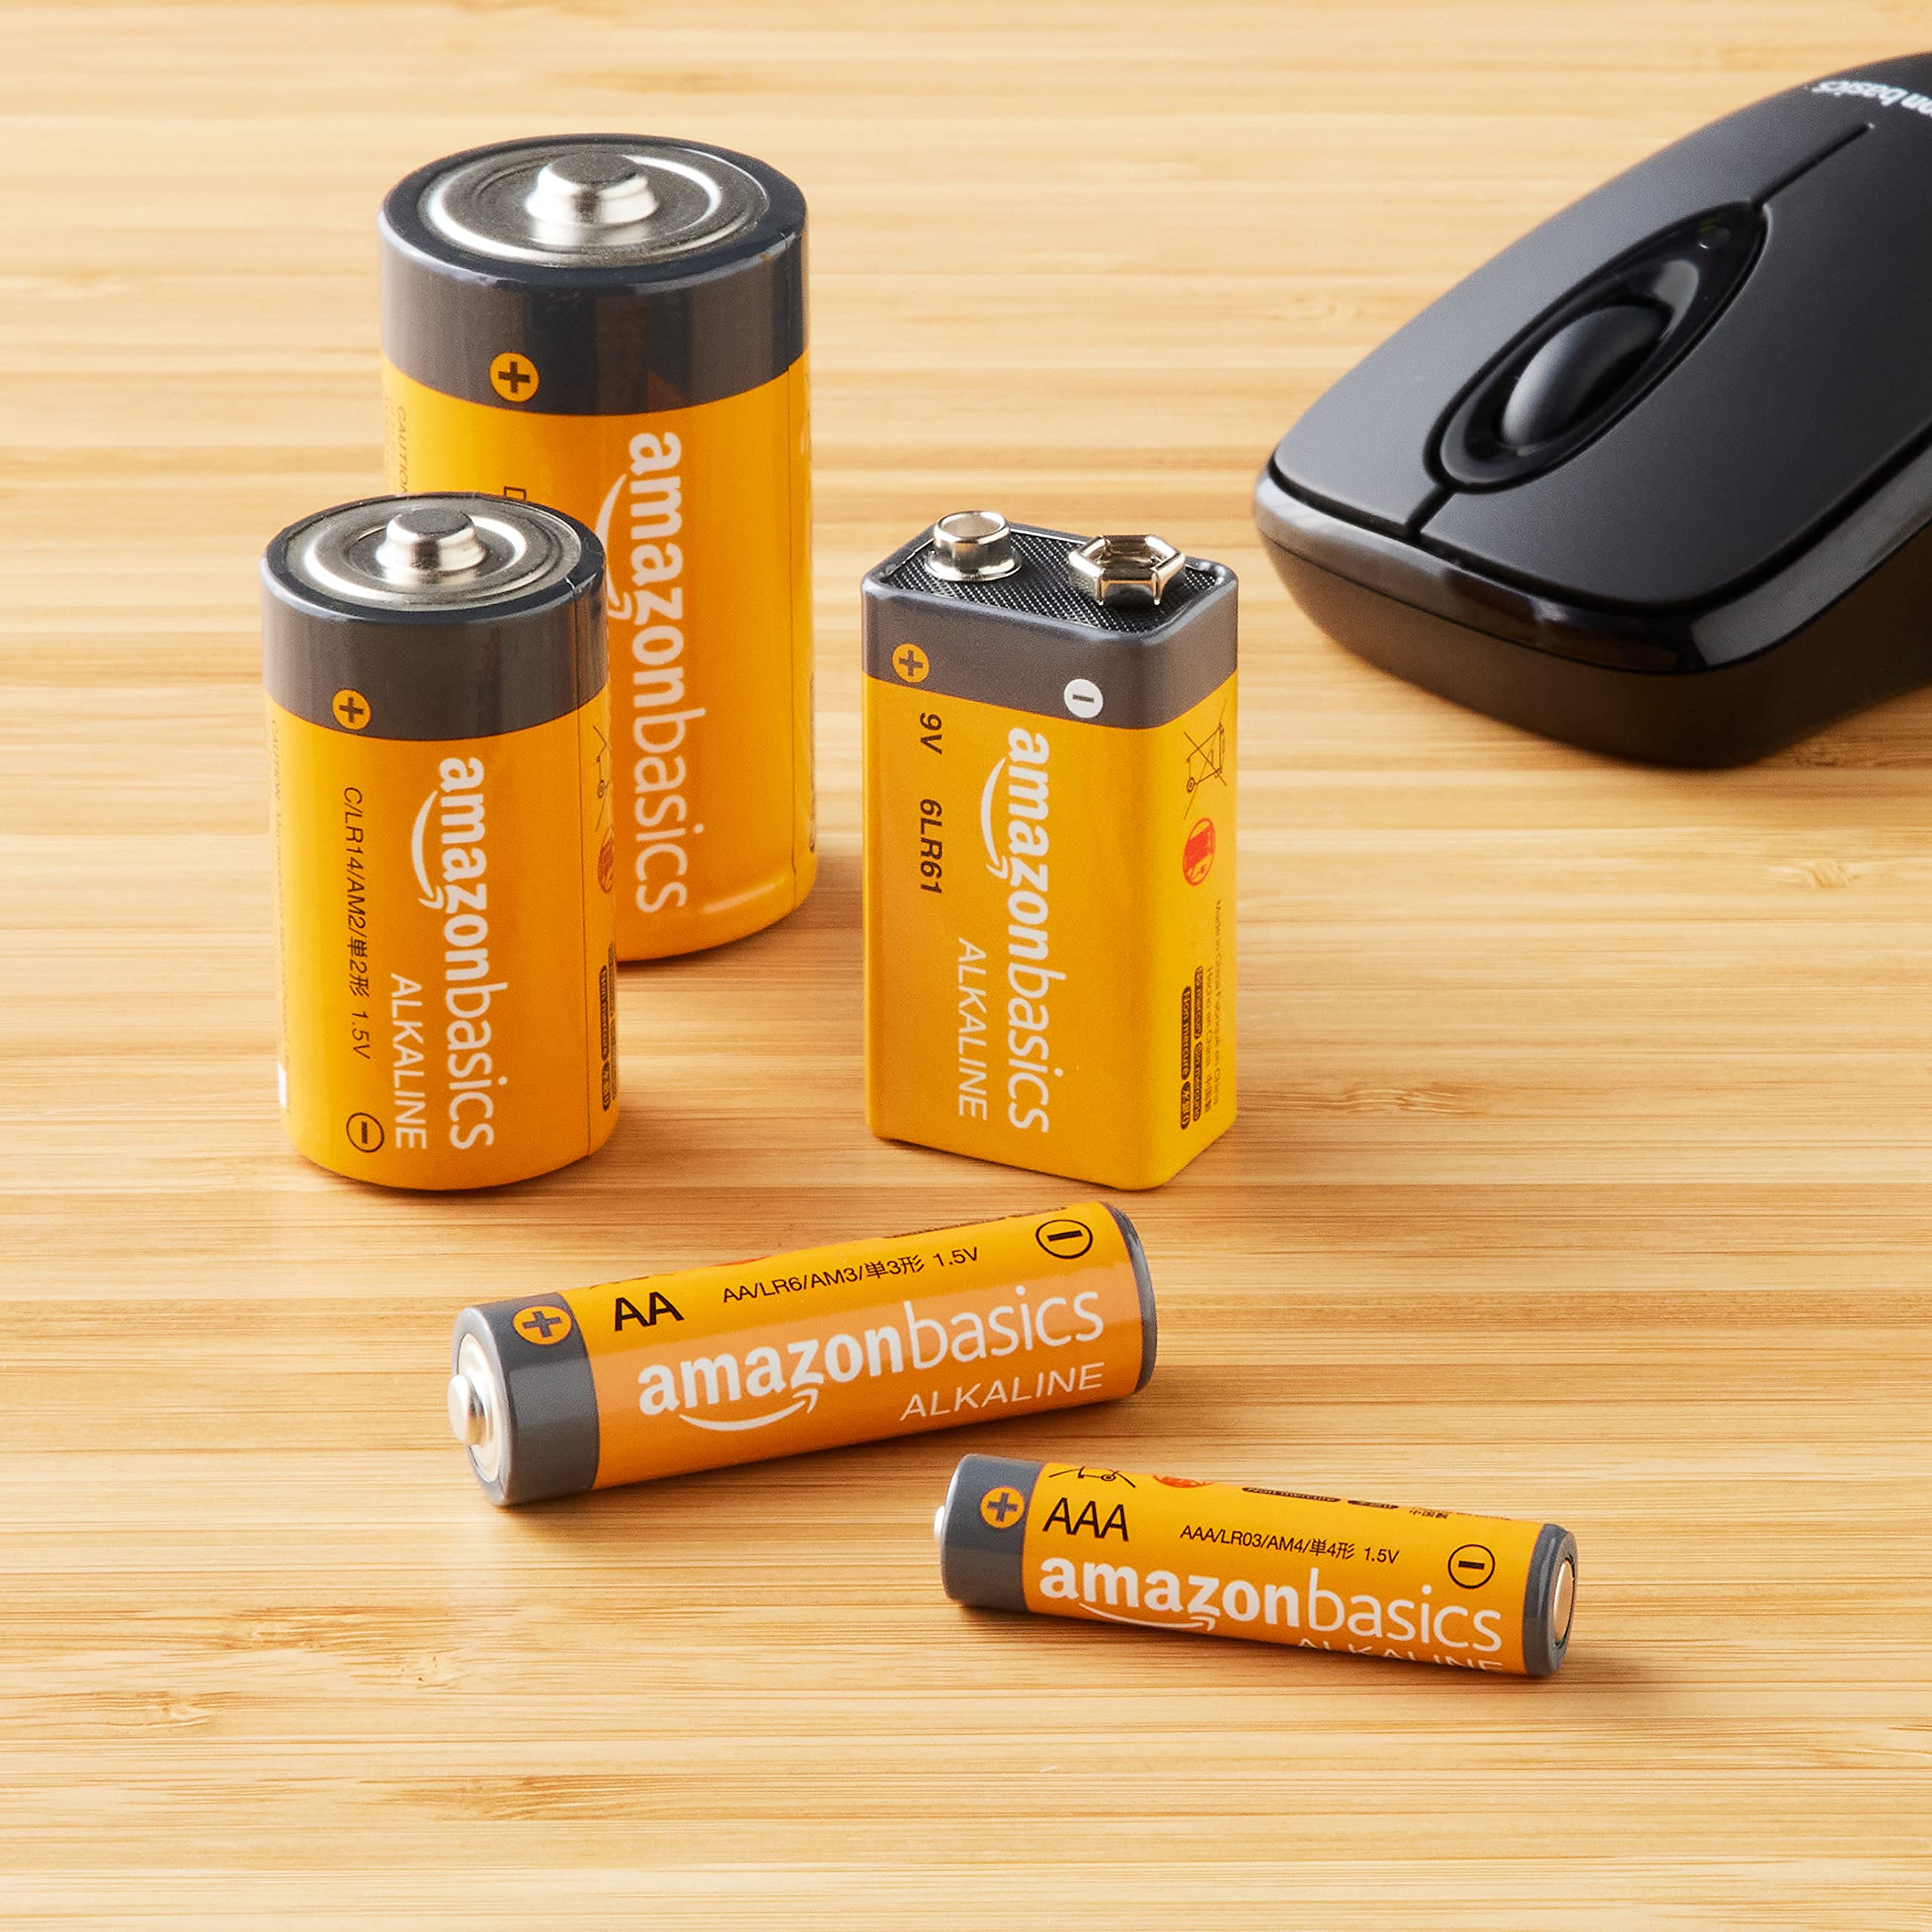 Amazon Basics 108 Count Alkaline Battery Super Value Pack - 48 AA + 36 AAA + 8 C + 8 D + 8 9Volt